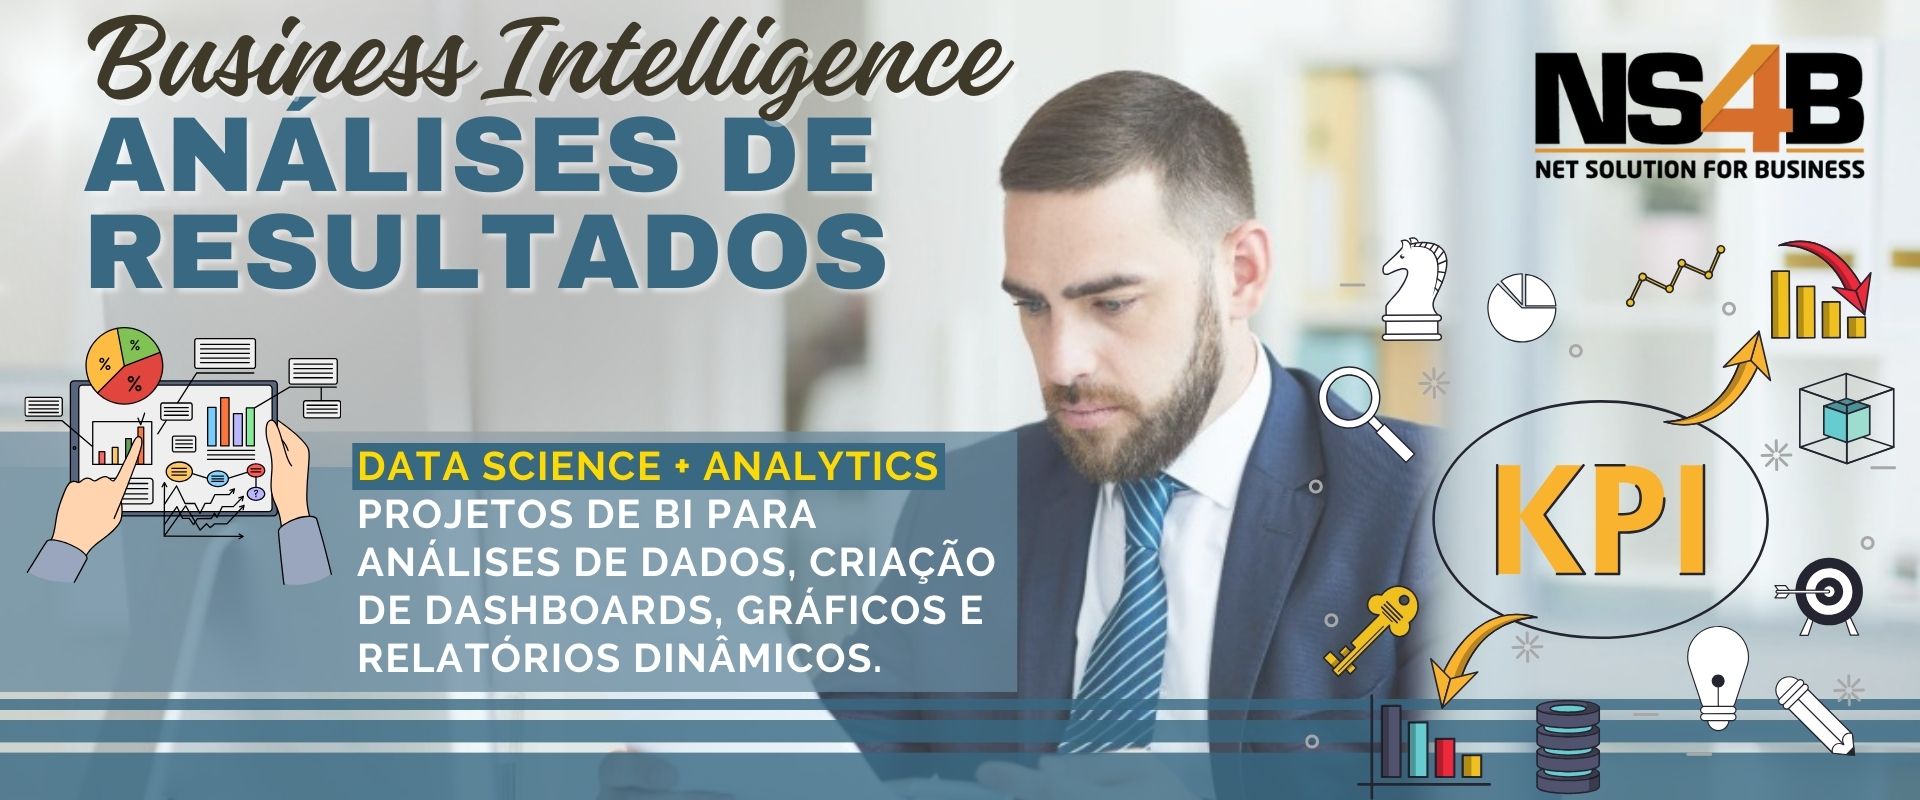 Business Intelligence - Data Science + Analytics